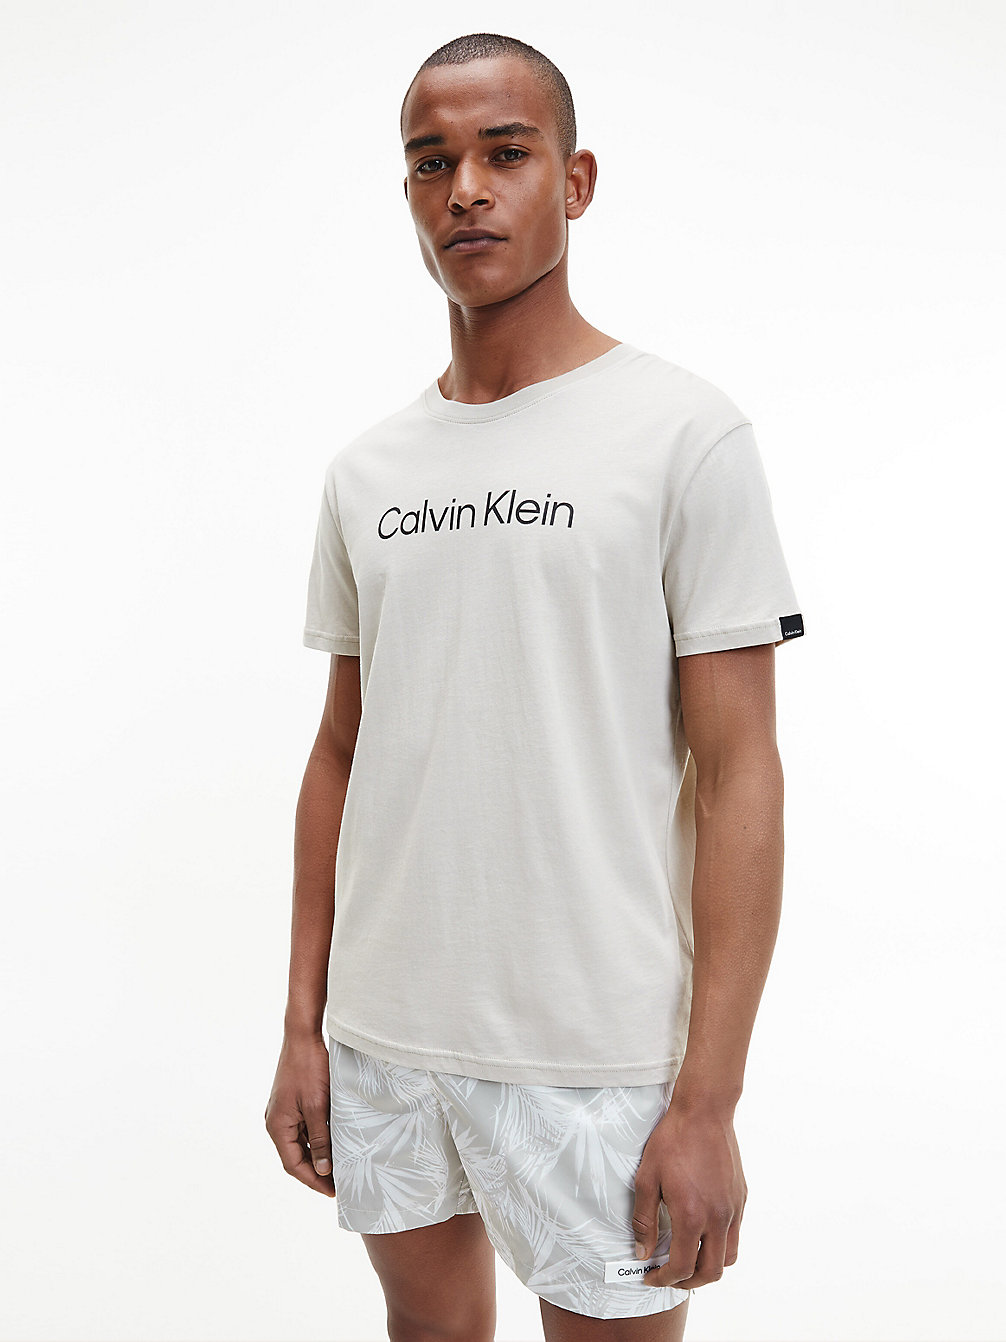 LIGHT STONE > Пляжная футболка из органического хлопка - Core Solids > undefined женщины - Calvin Klein